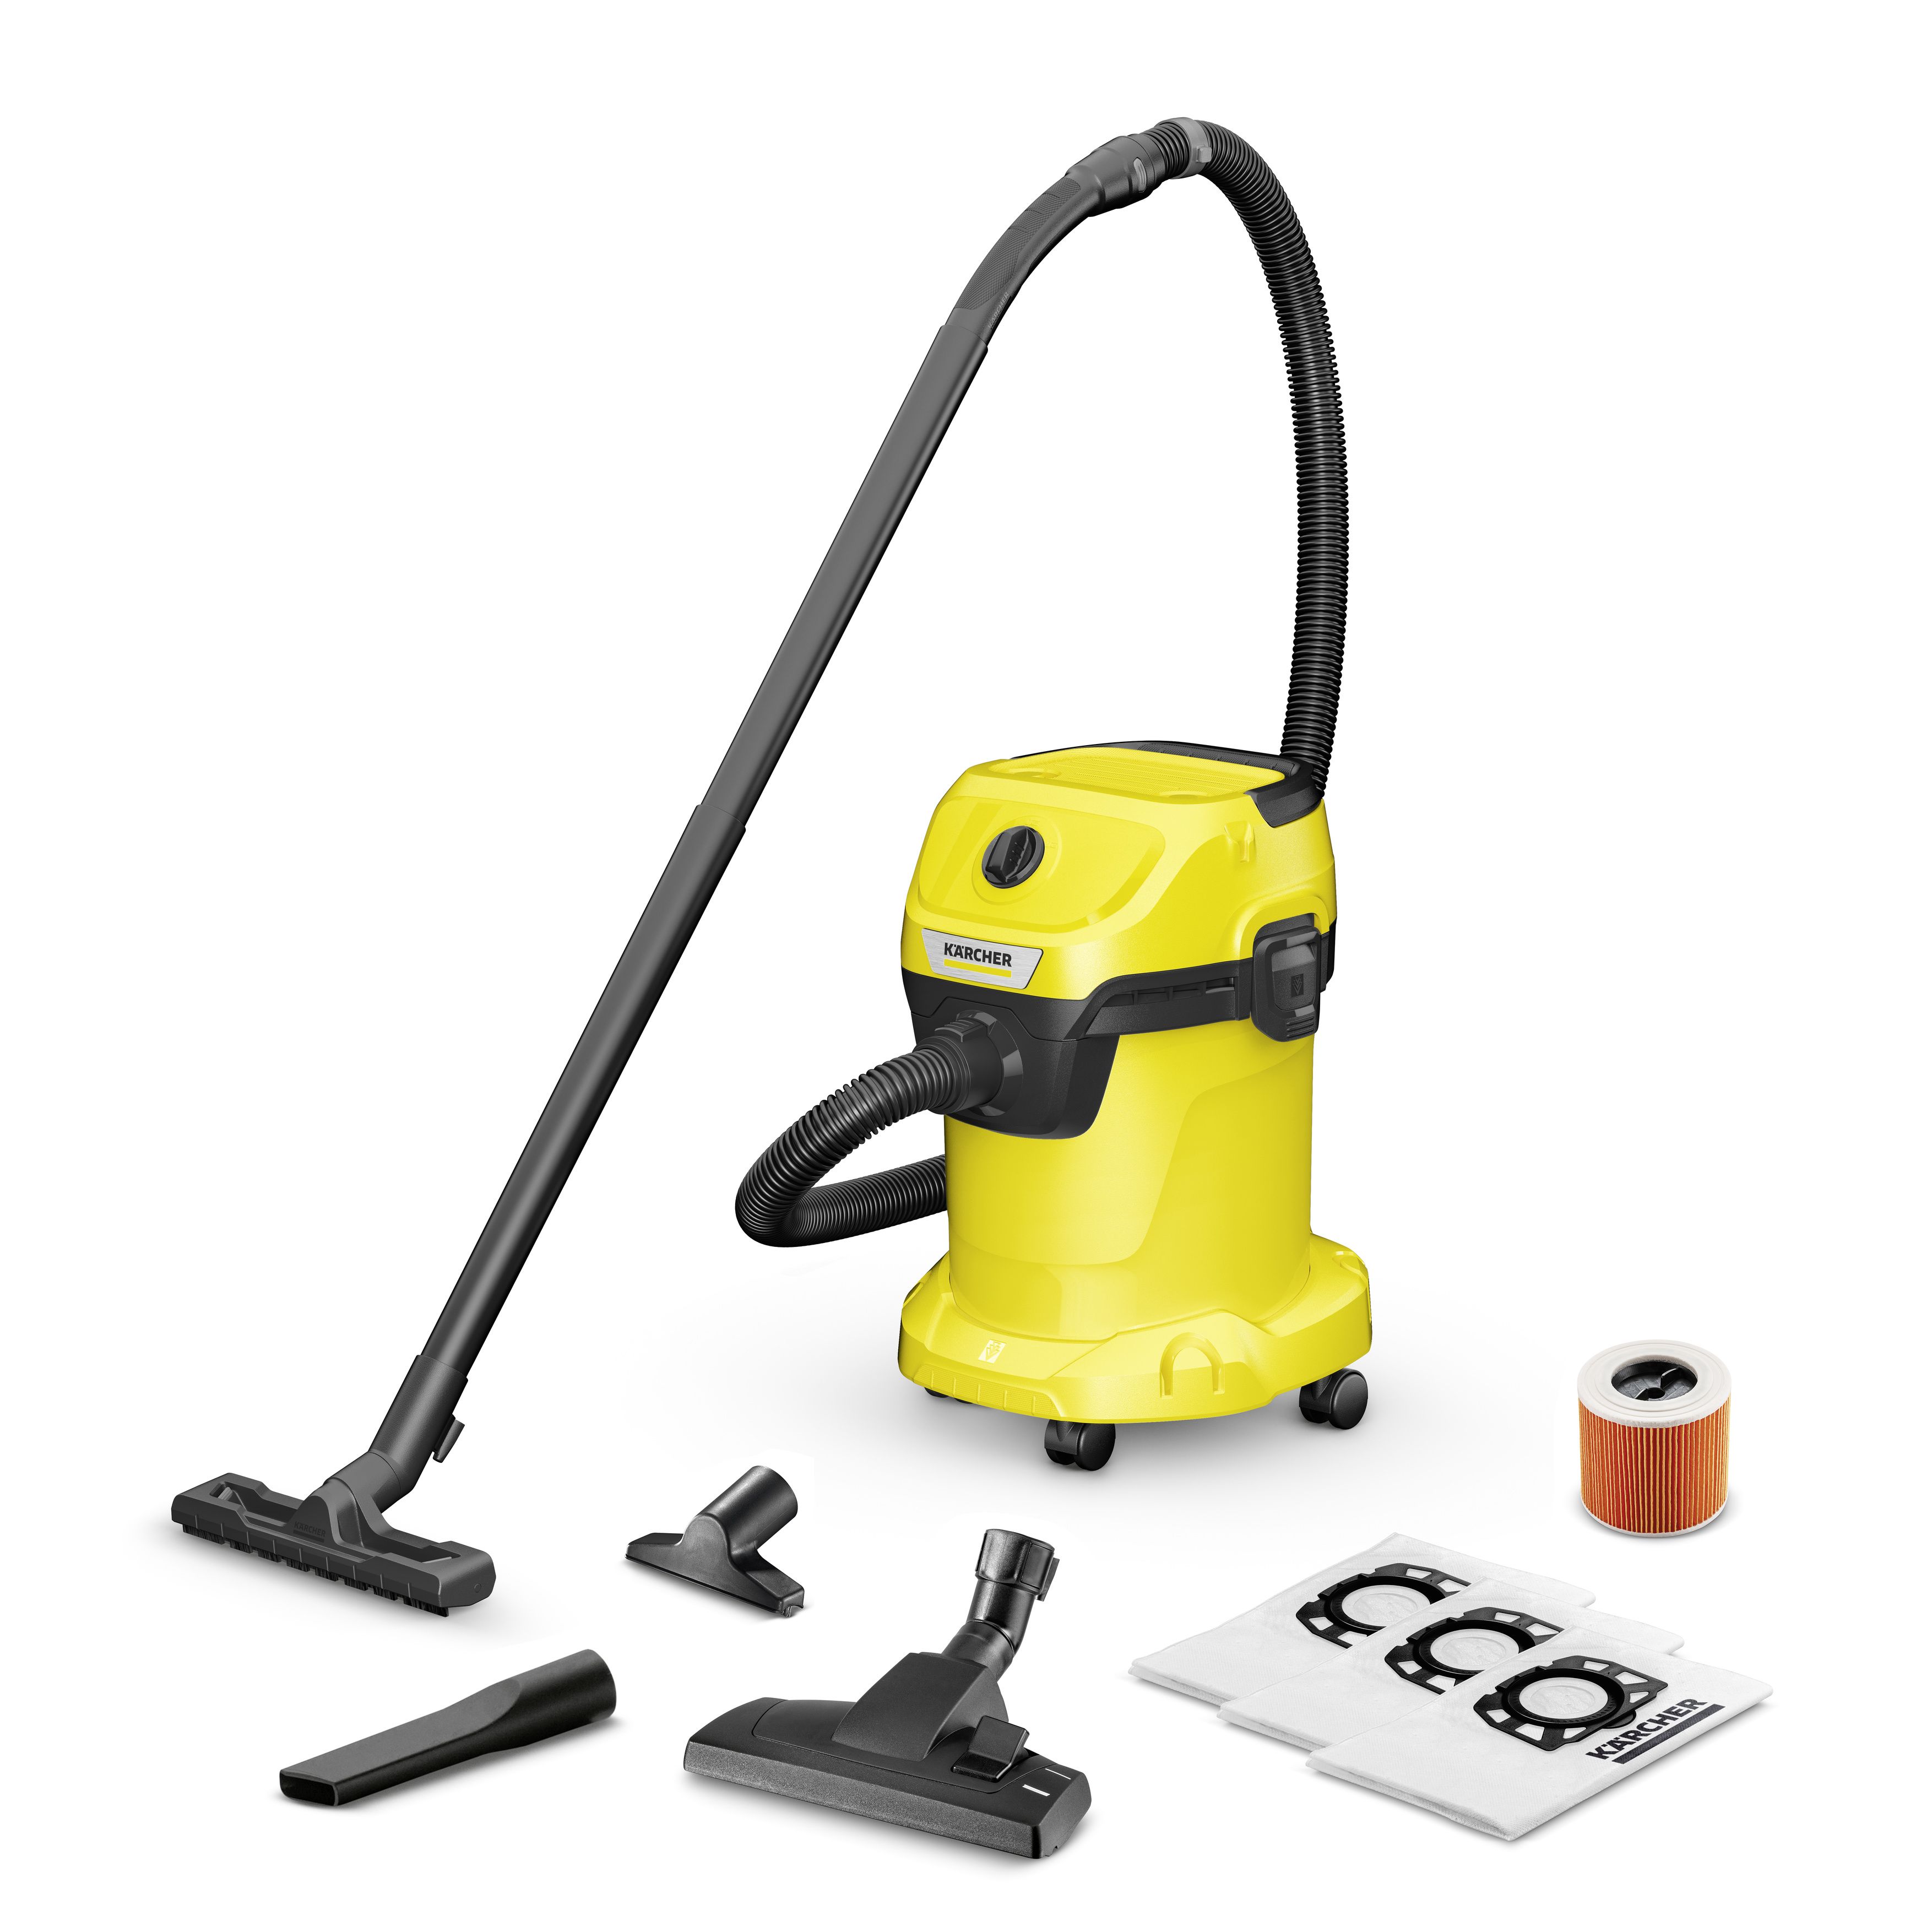 Shop Vac 90671 Bagkarcher Wd3 Vacuum Cleaner Dust Bags - High